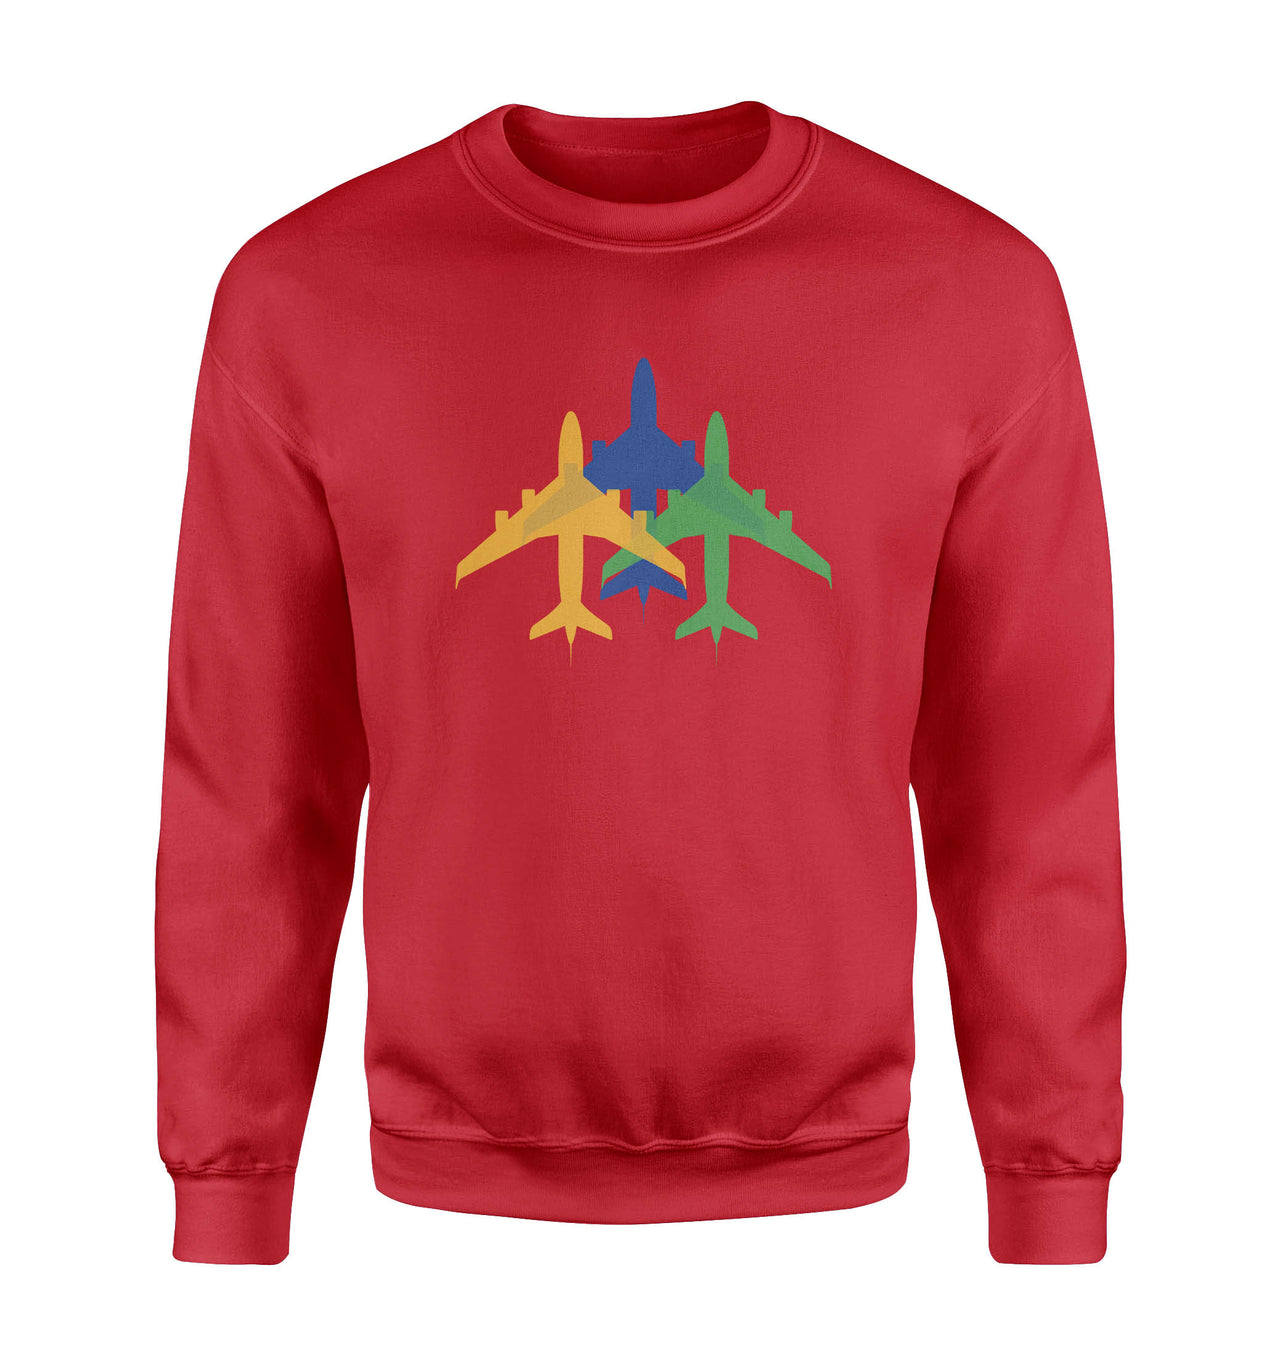 Colourful 3 Airplanes Designed Sweatshirts